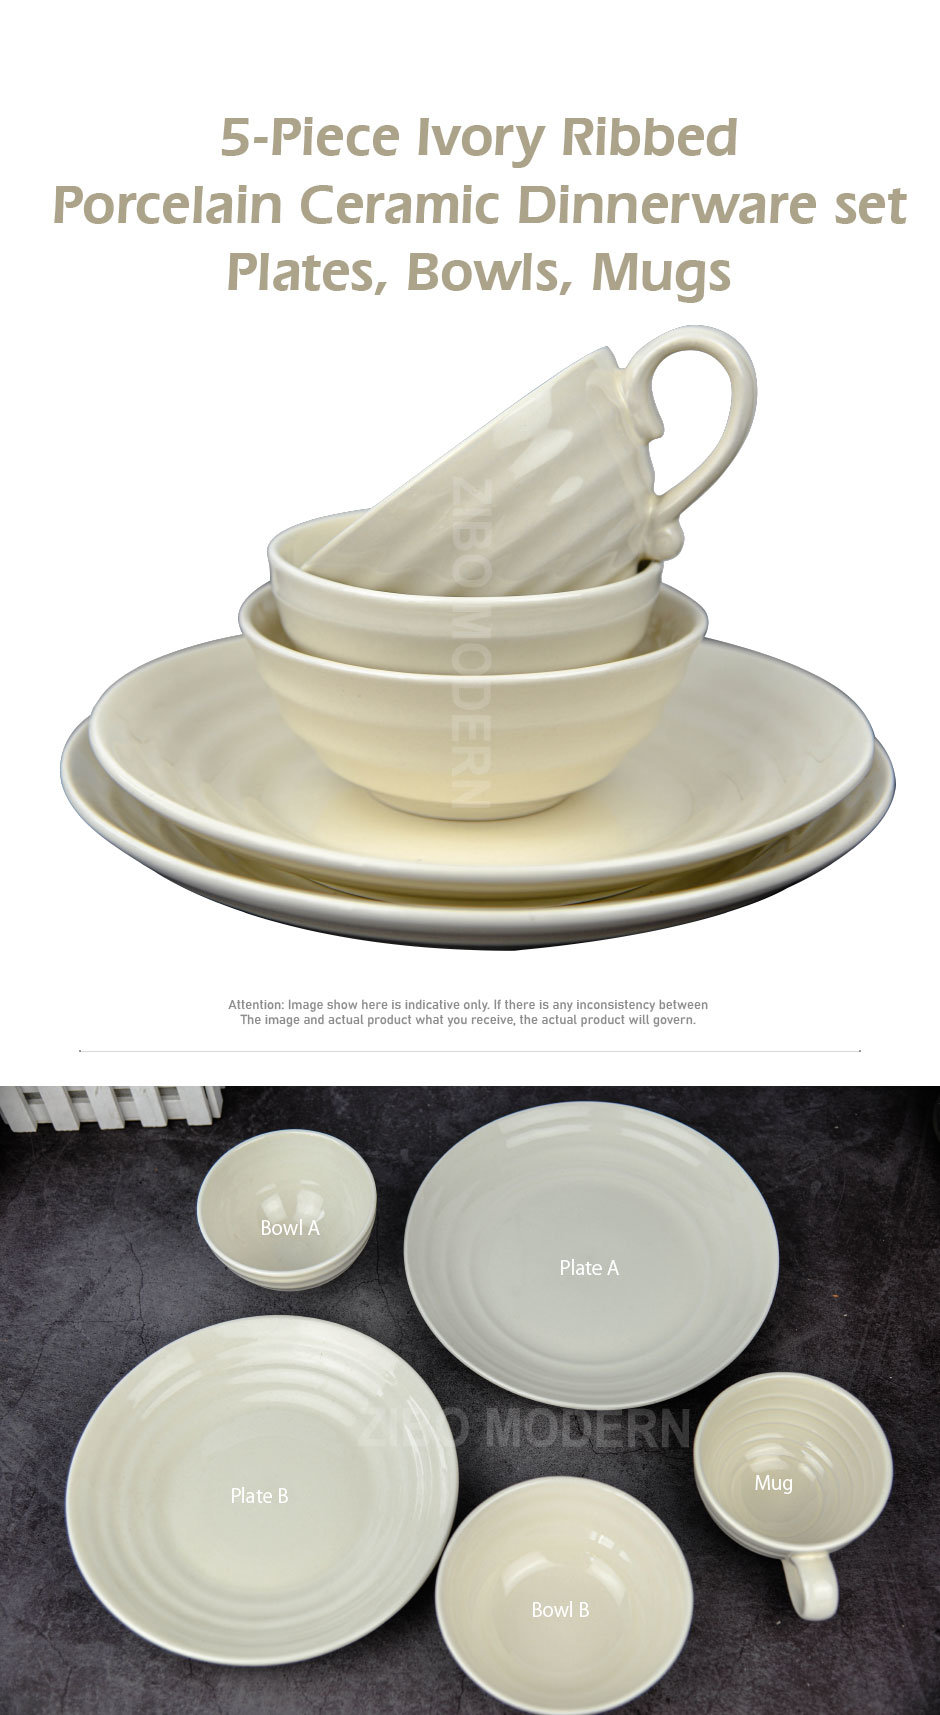 5-Piece Ivory Ribbed Porcelain Ceramic Dinnerware Set Plates, Bowls, Mugs - Ceramic Dishware Set - Stoneware